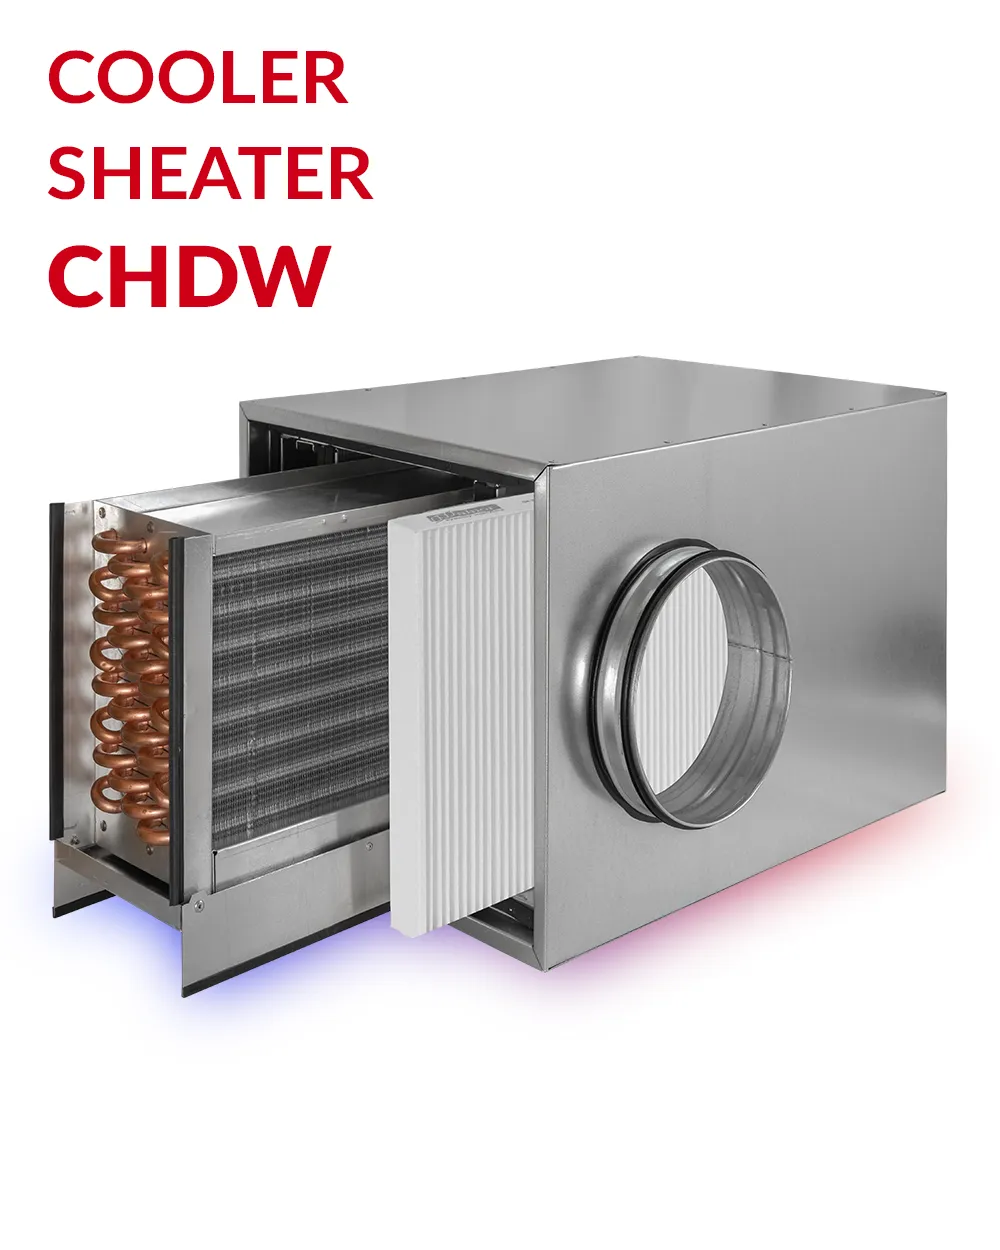 Dedicated to heat pumps - CHDE cooler-heater